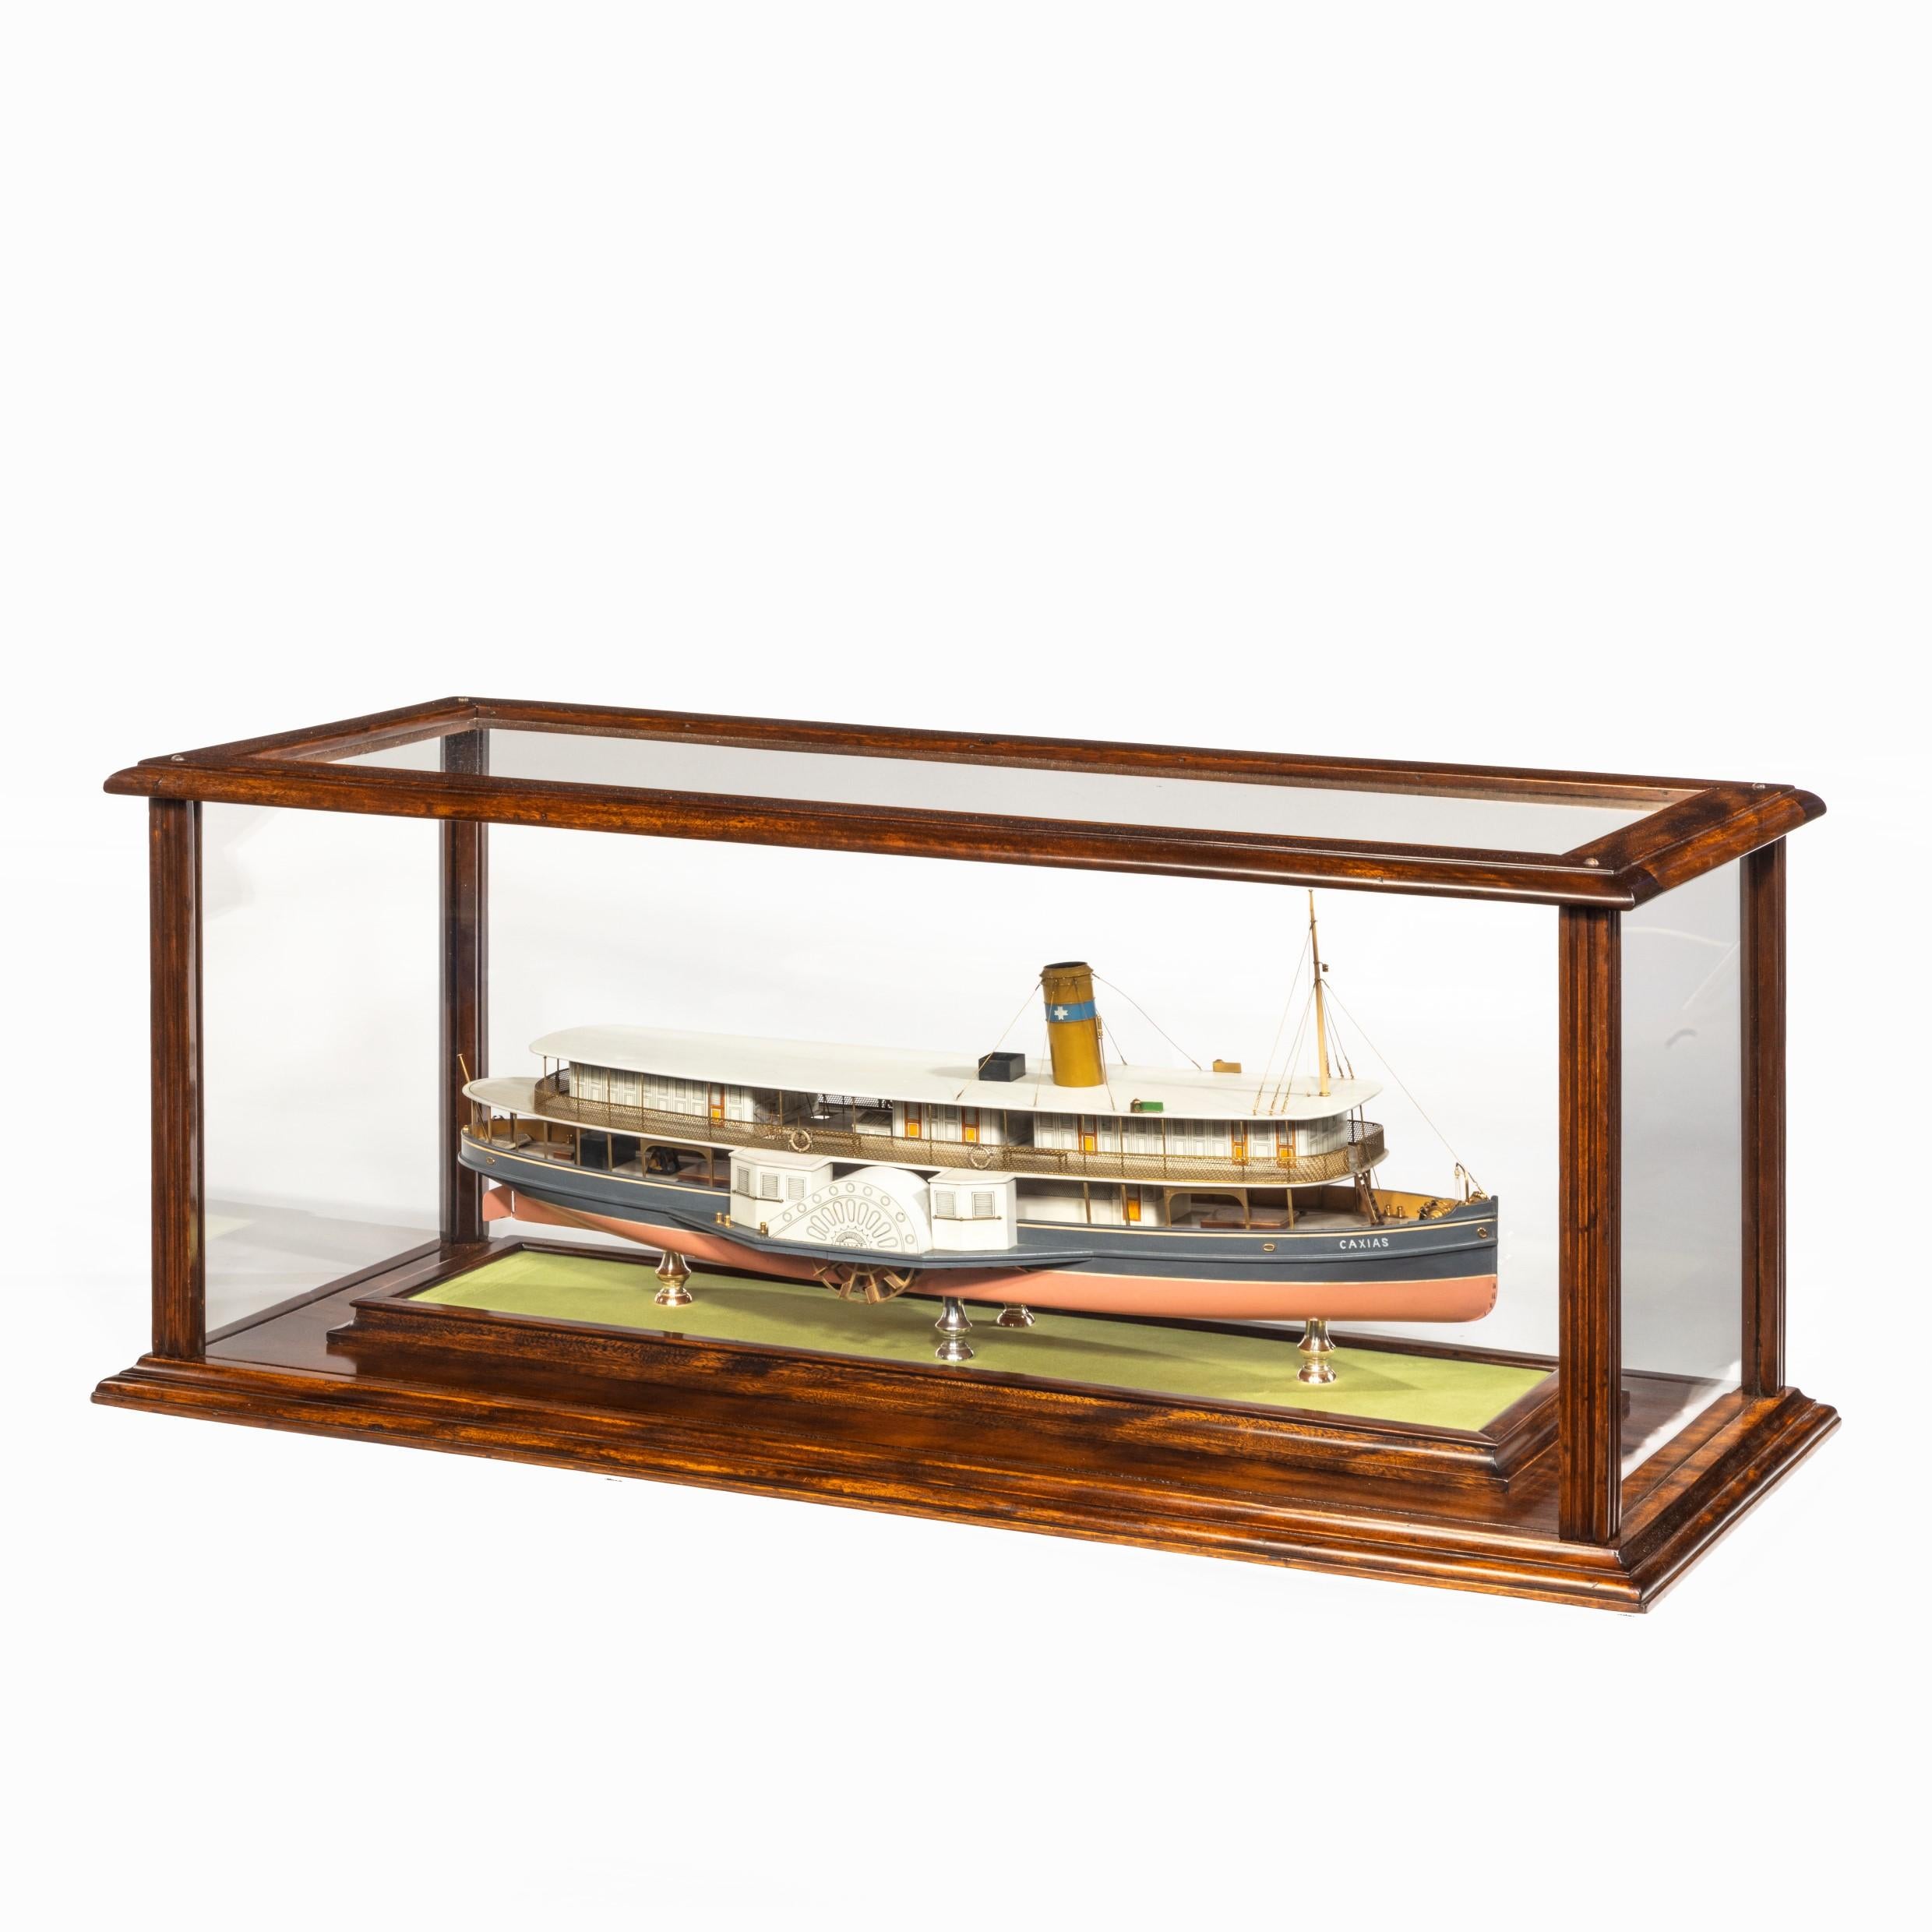 Builder’s Model of the Brazilian Passenger Paddle Steamer Caxias For Sale 1